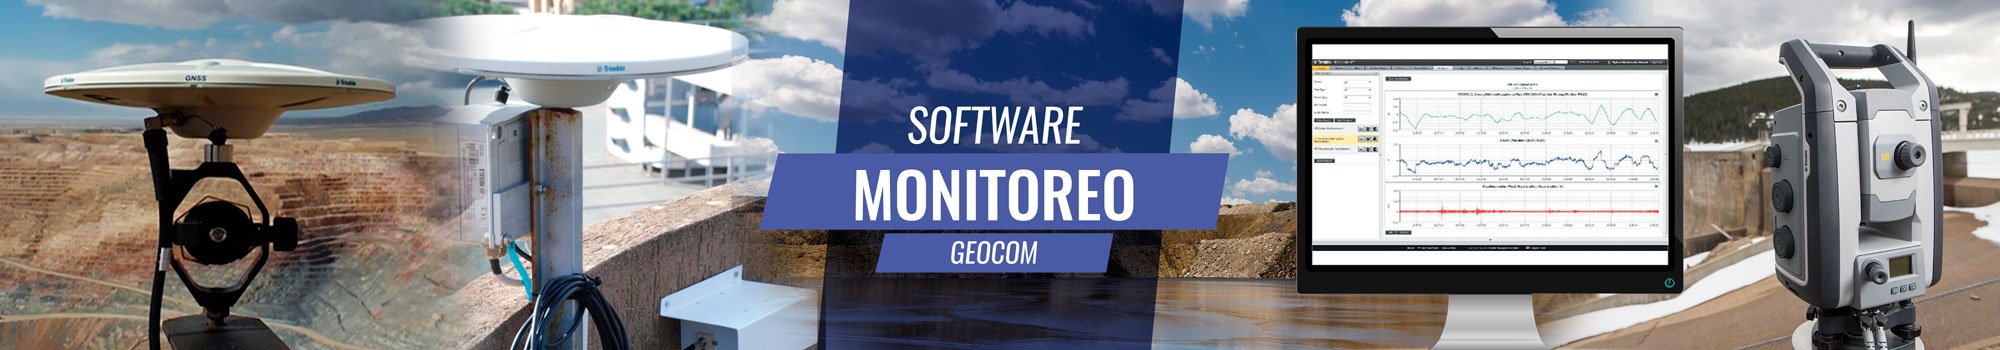 Software Monitoreo